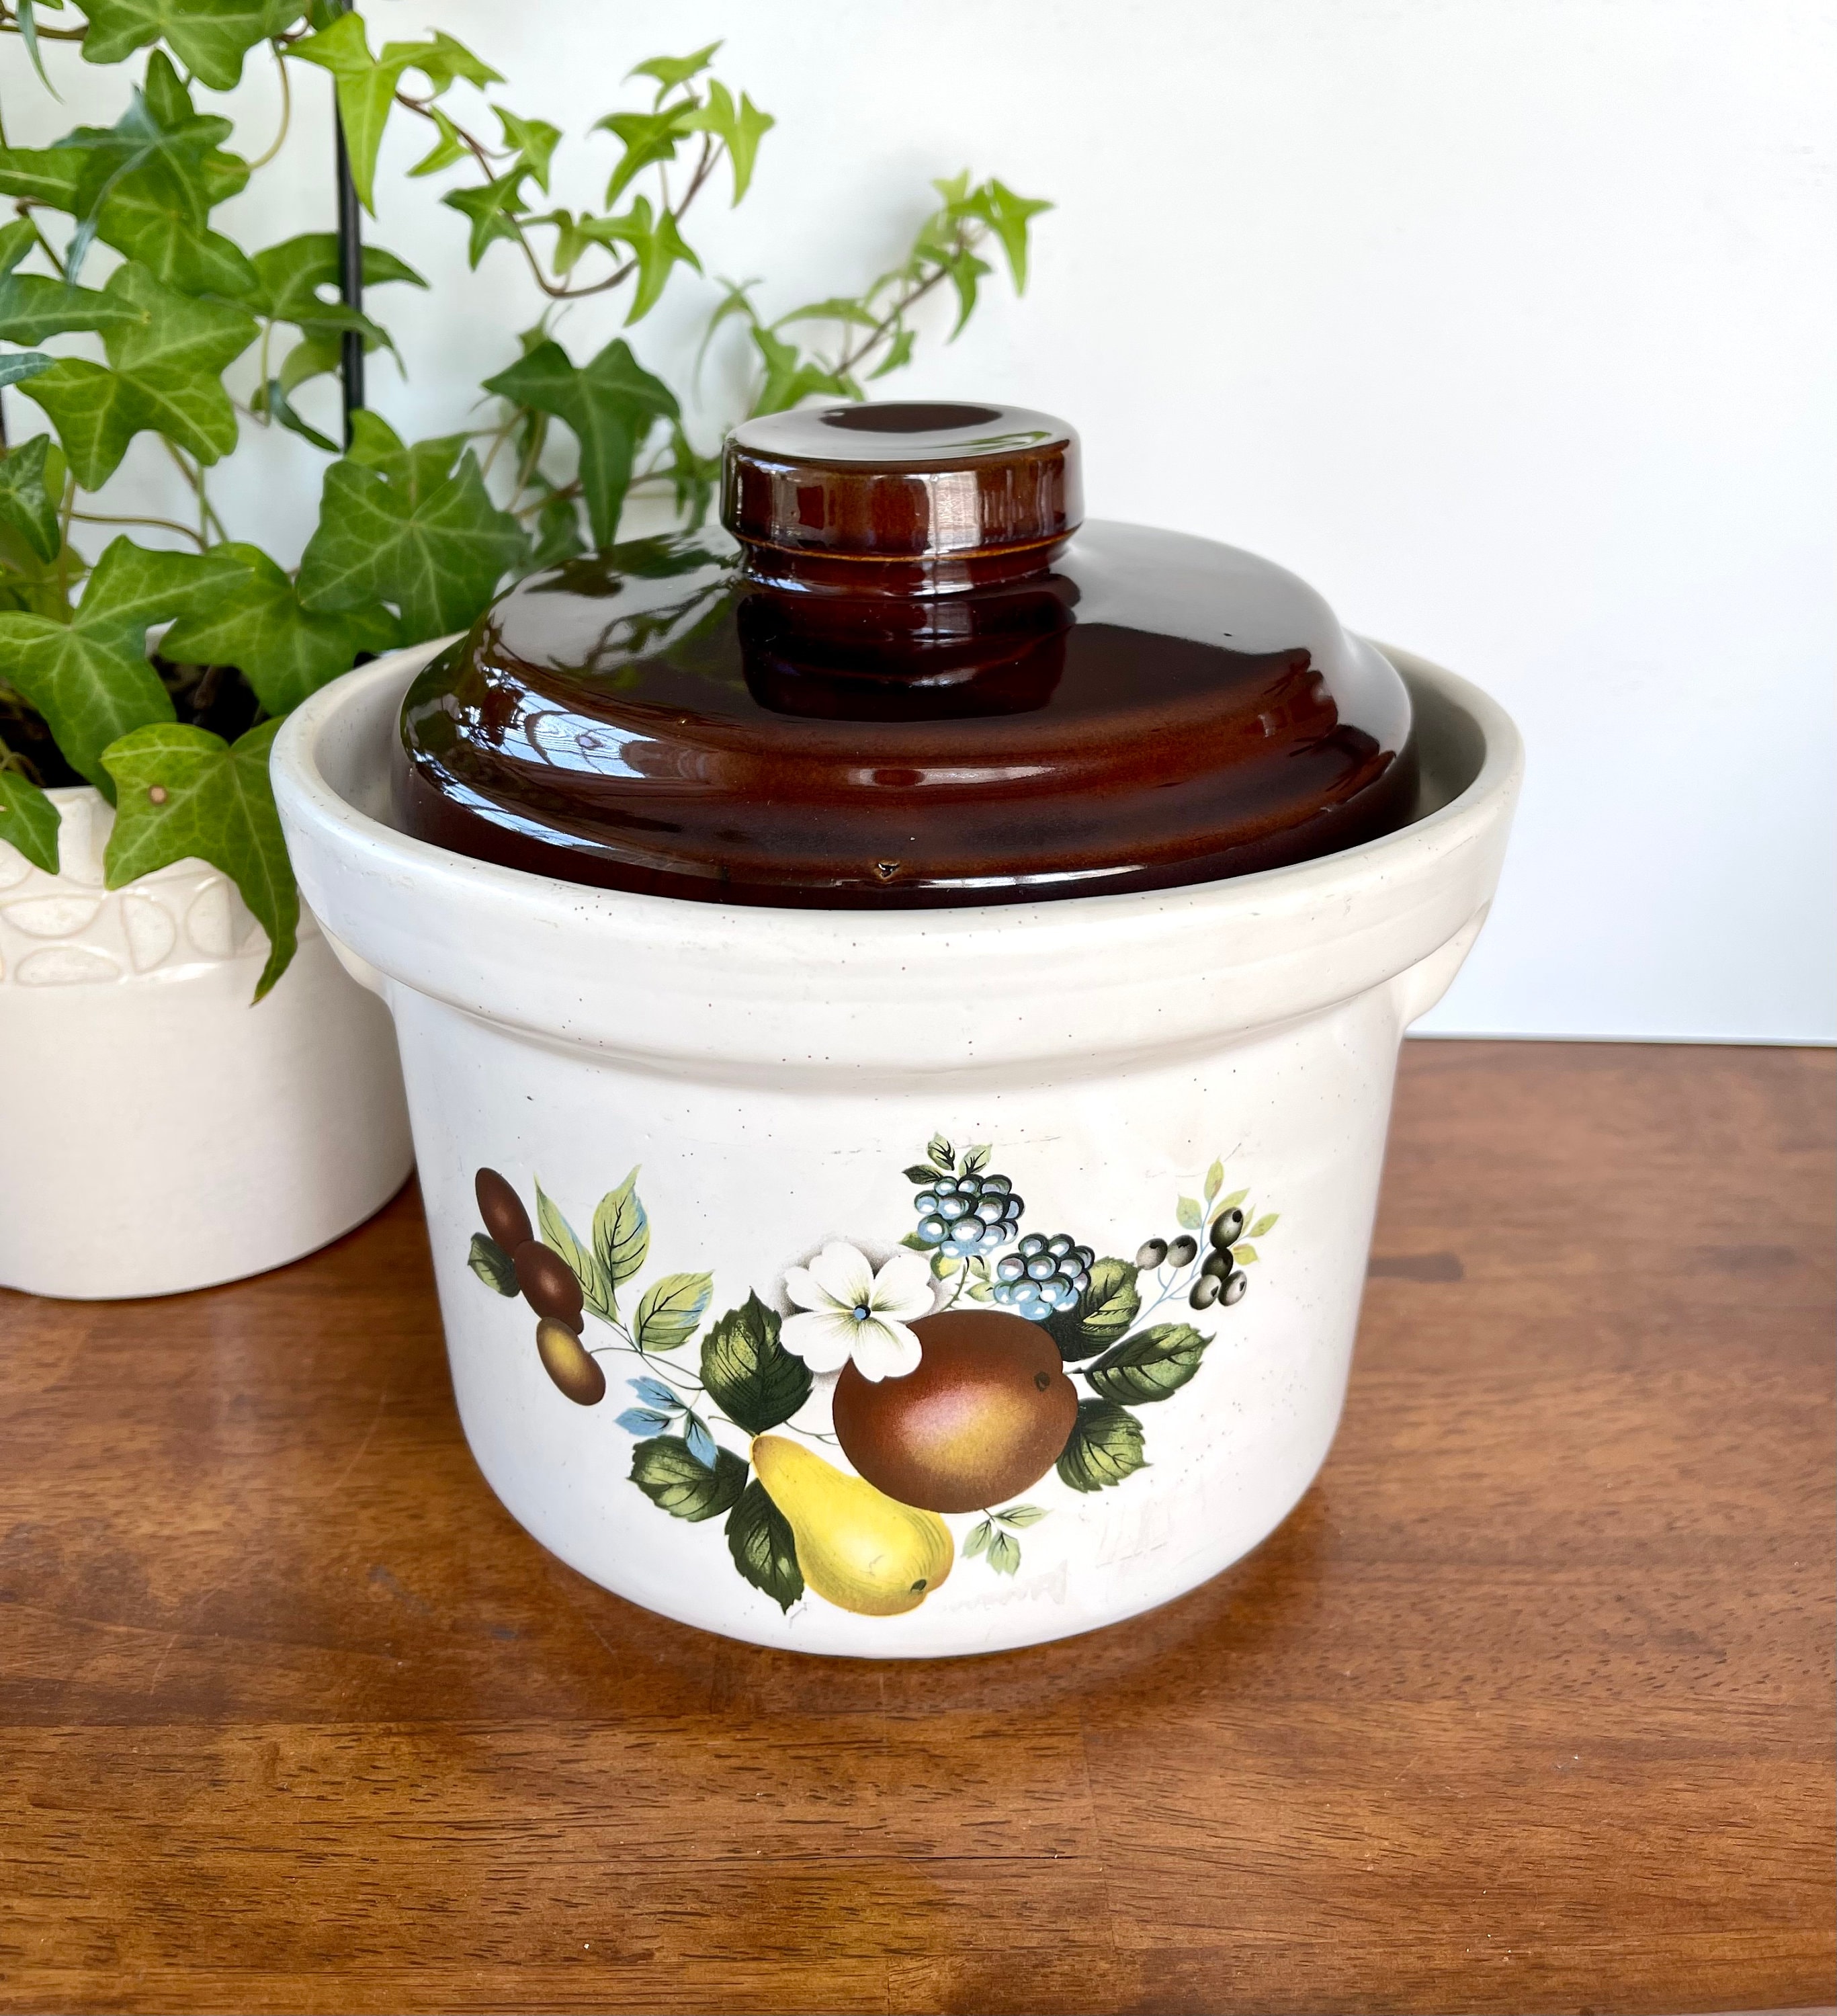 Herzog Tiffany 1-Quart Ceramic Stew Pot in the Cooking Pots